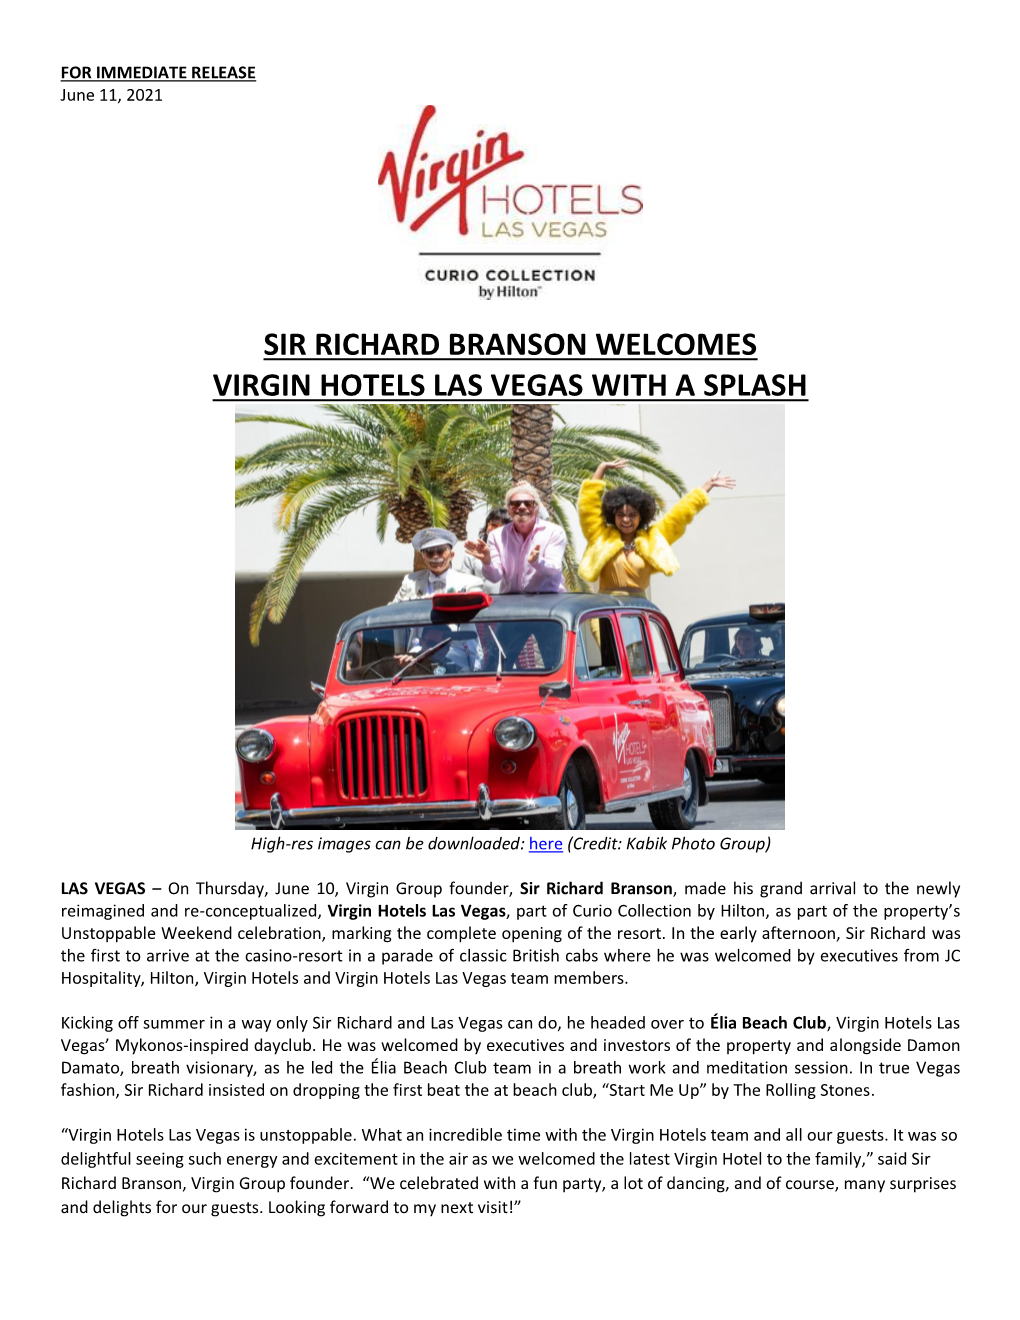 Sir Richard Branson Welcomes Virgin Hotels Las Vegas with a Splash